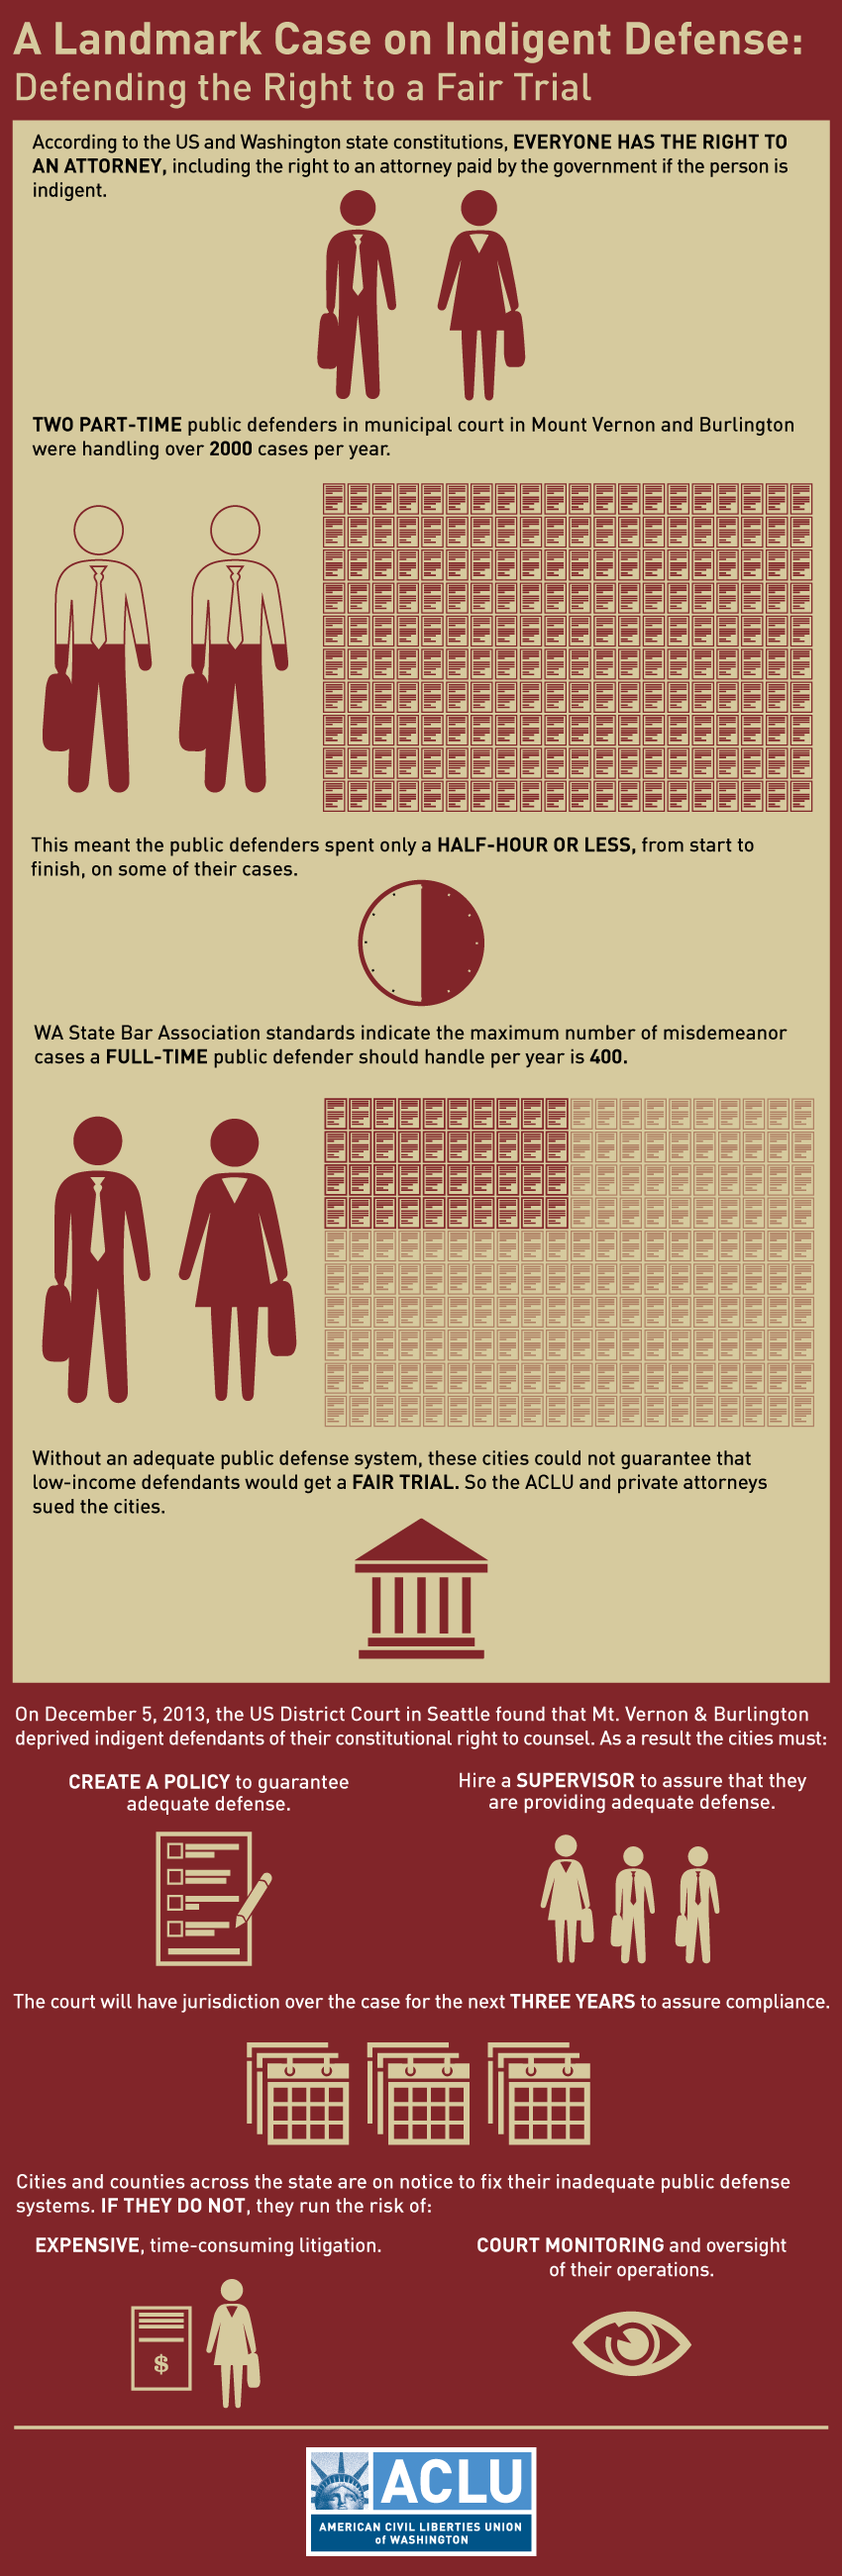 An infographic on a landmark case on indigent defense